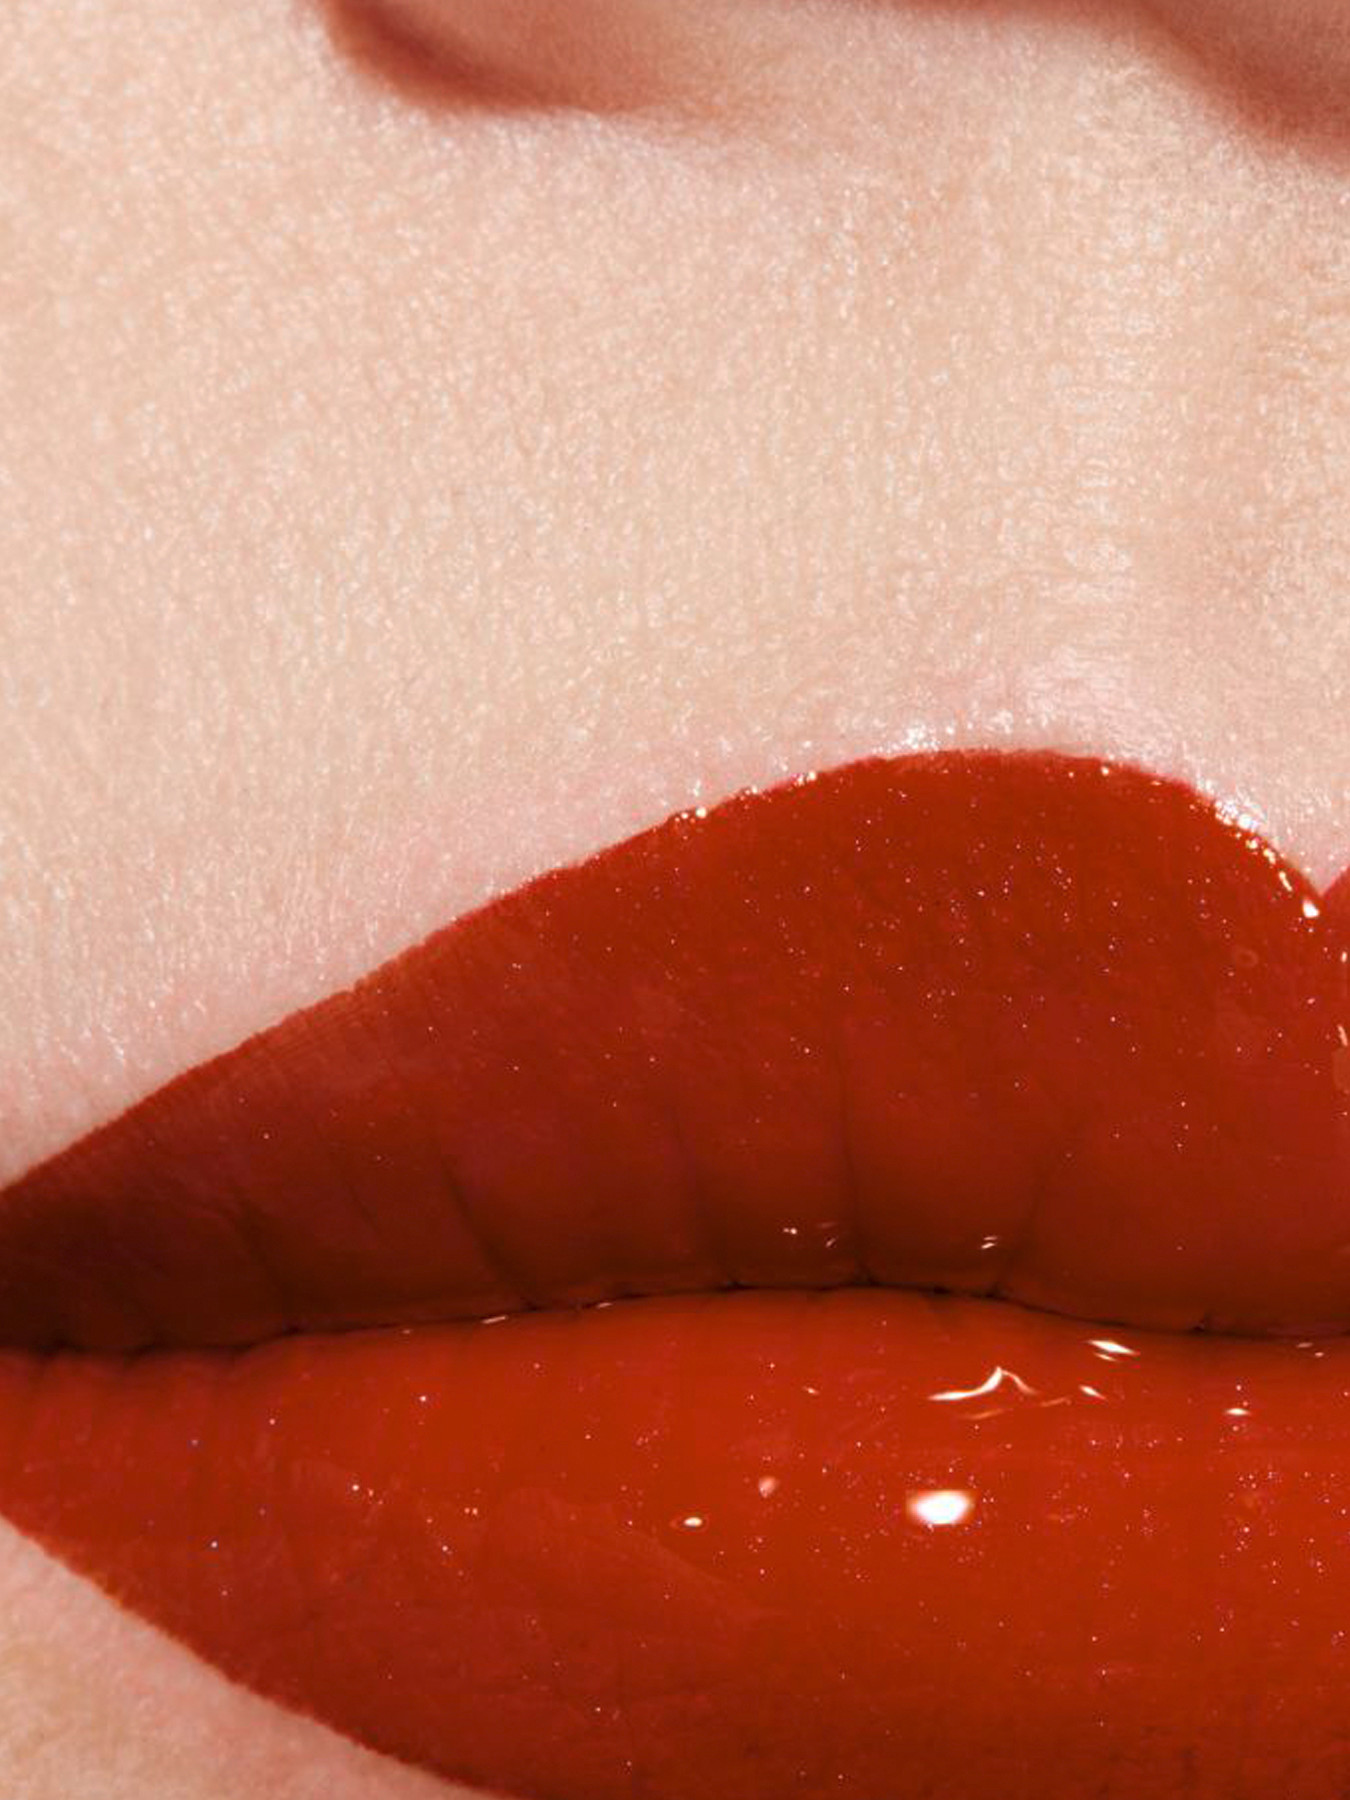 CHANEL LE ROUGE DUO ULTRA TENUE Ultra Wear Liquid Lip Colour